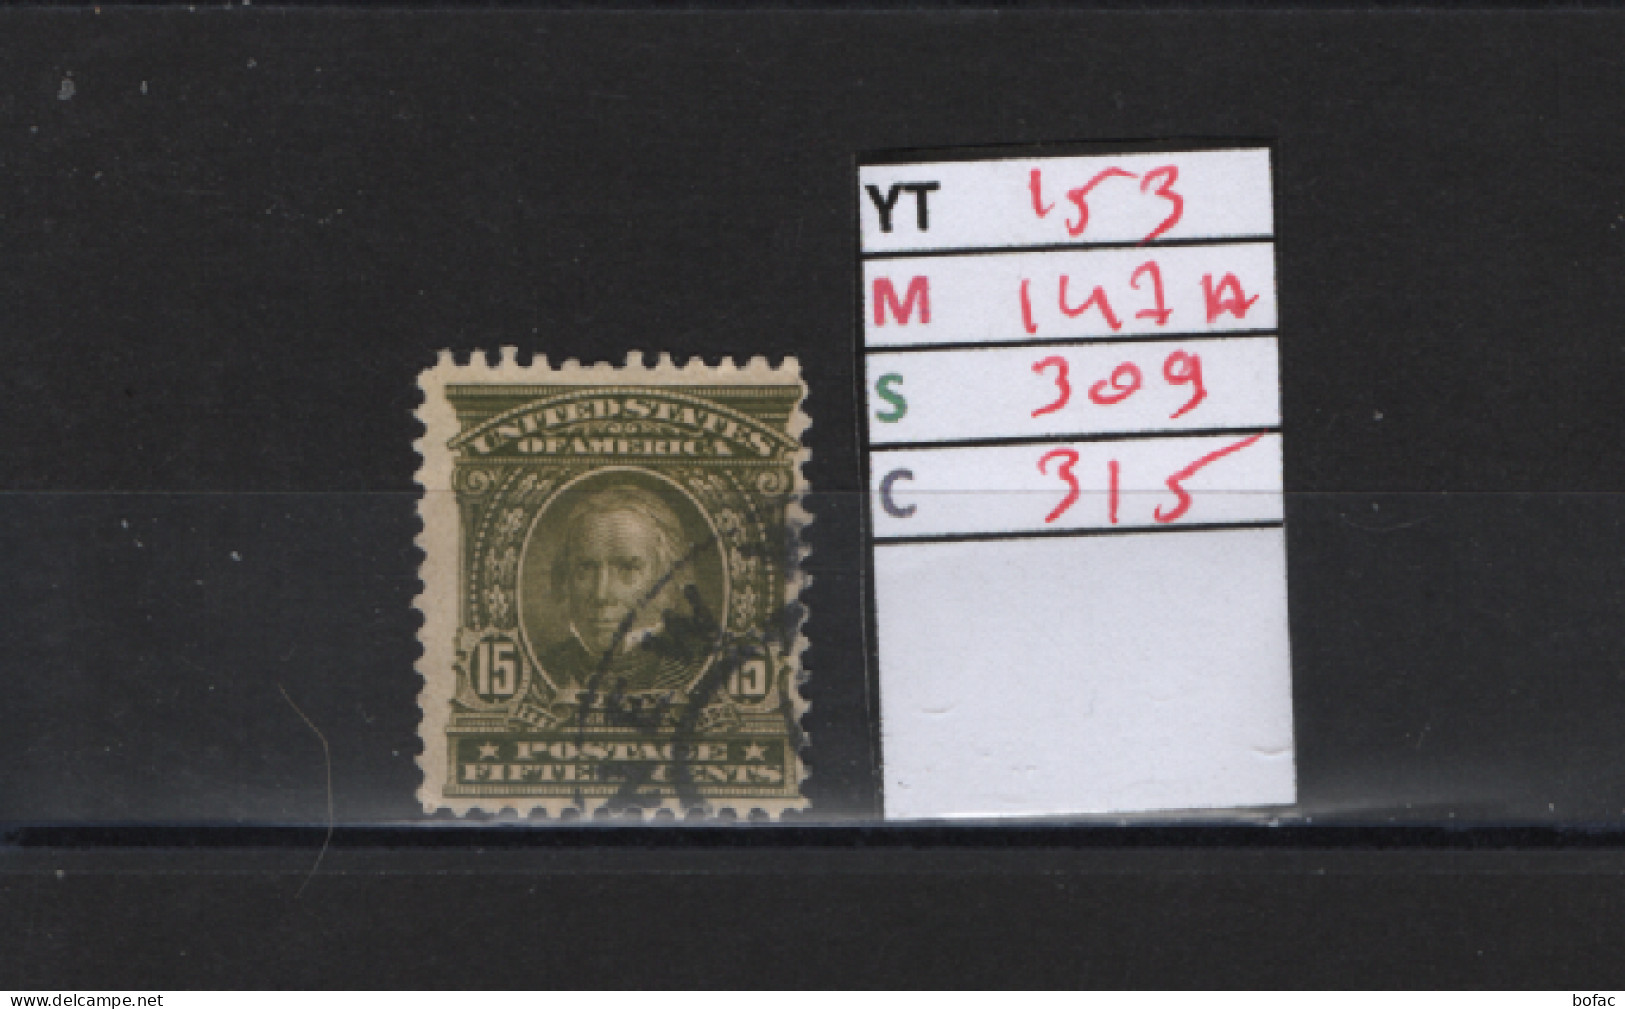 PRIX FIXE Obl  153 YT 147A MIC 309 SCOT 315 GIB H. Clay 1903 1907 Etats Unis 58/05 - Used Stamps